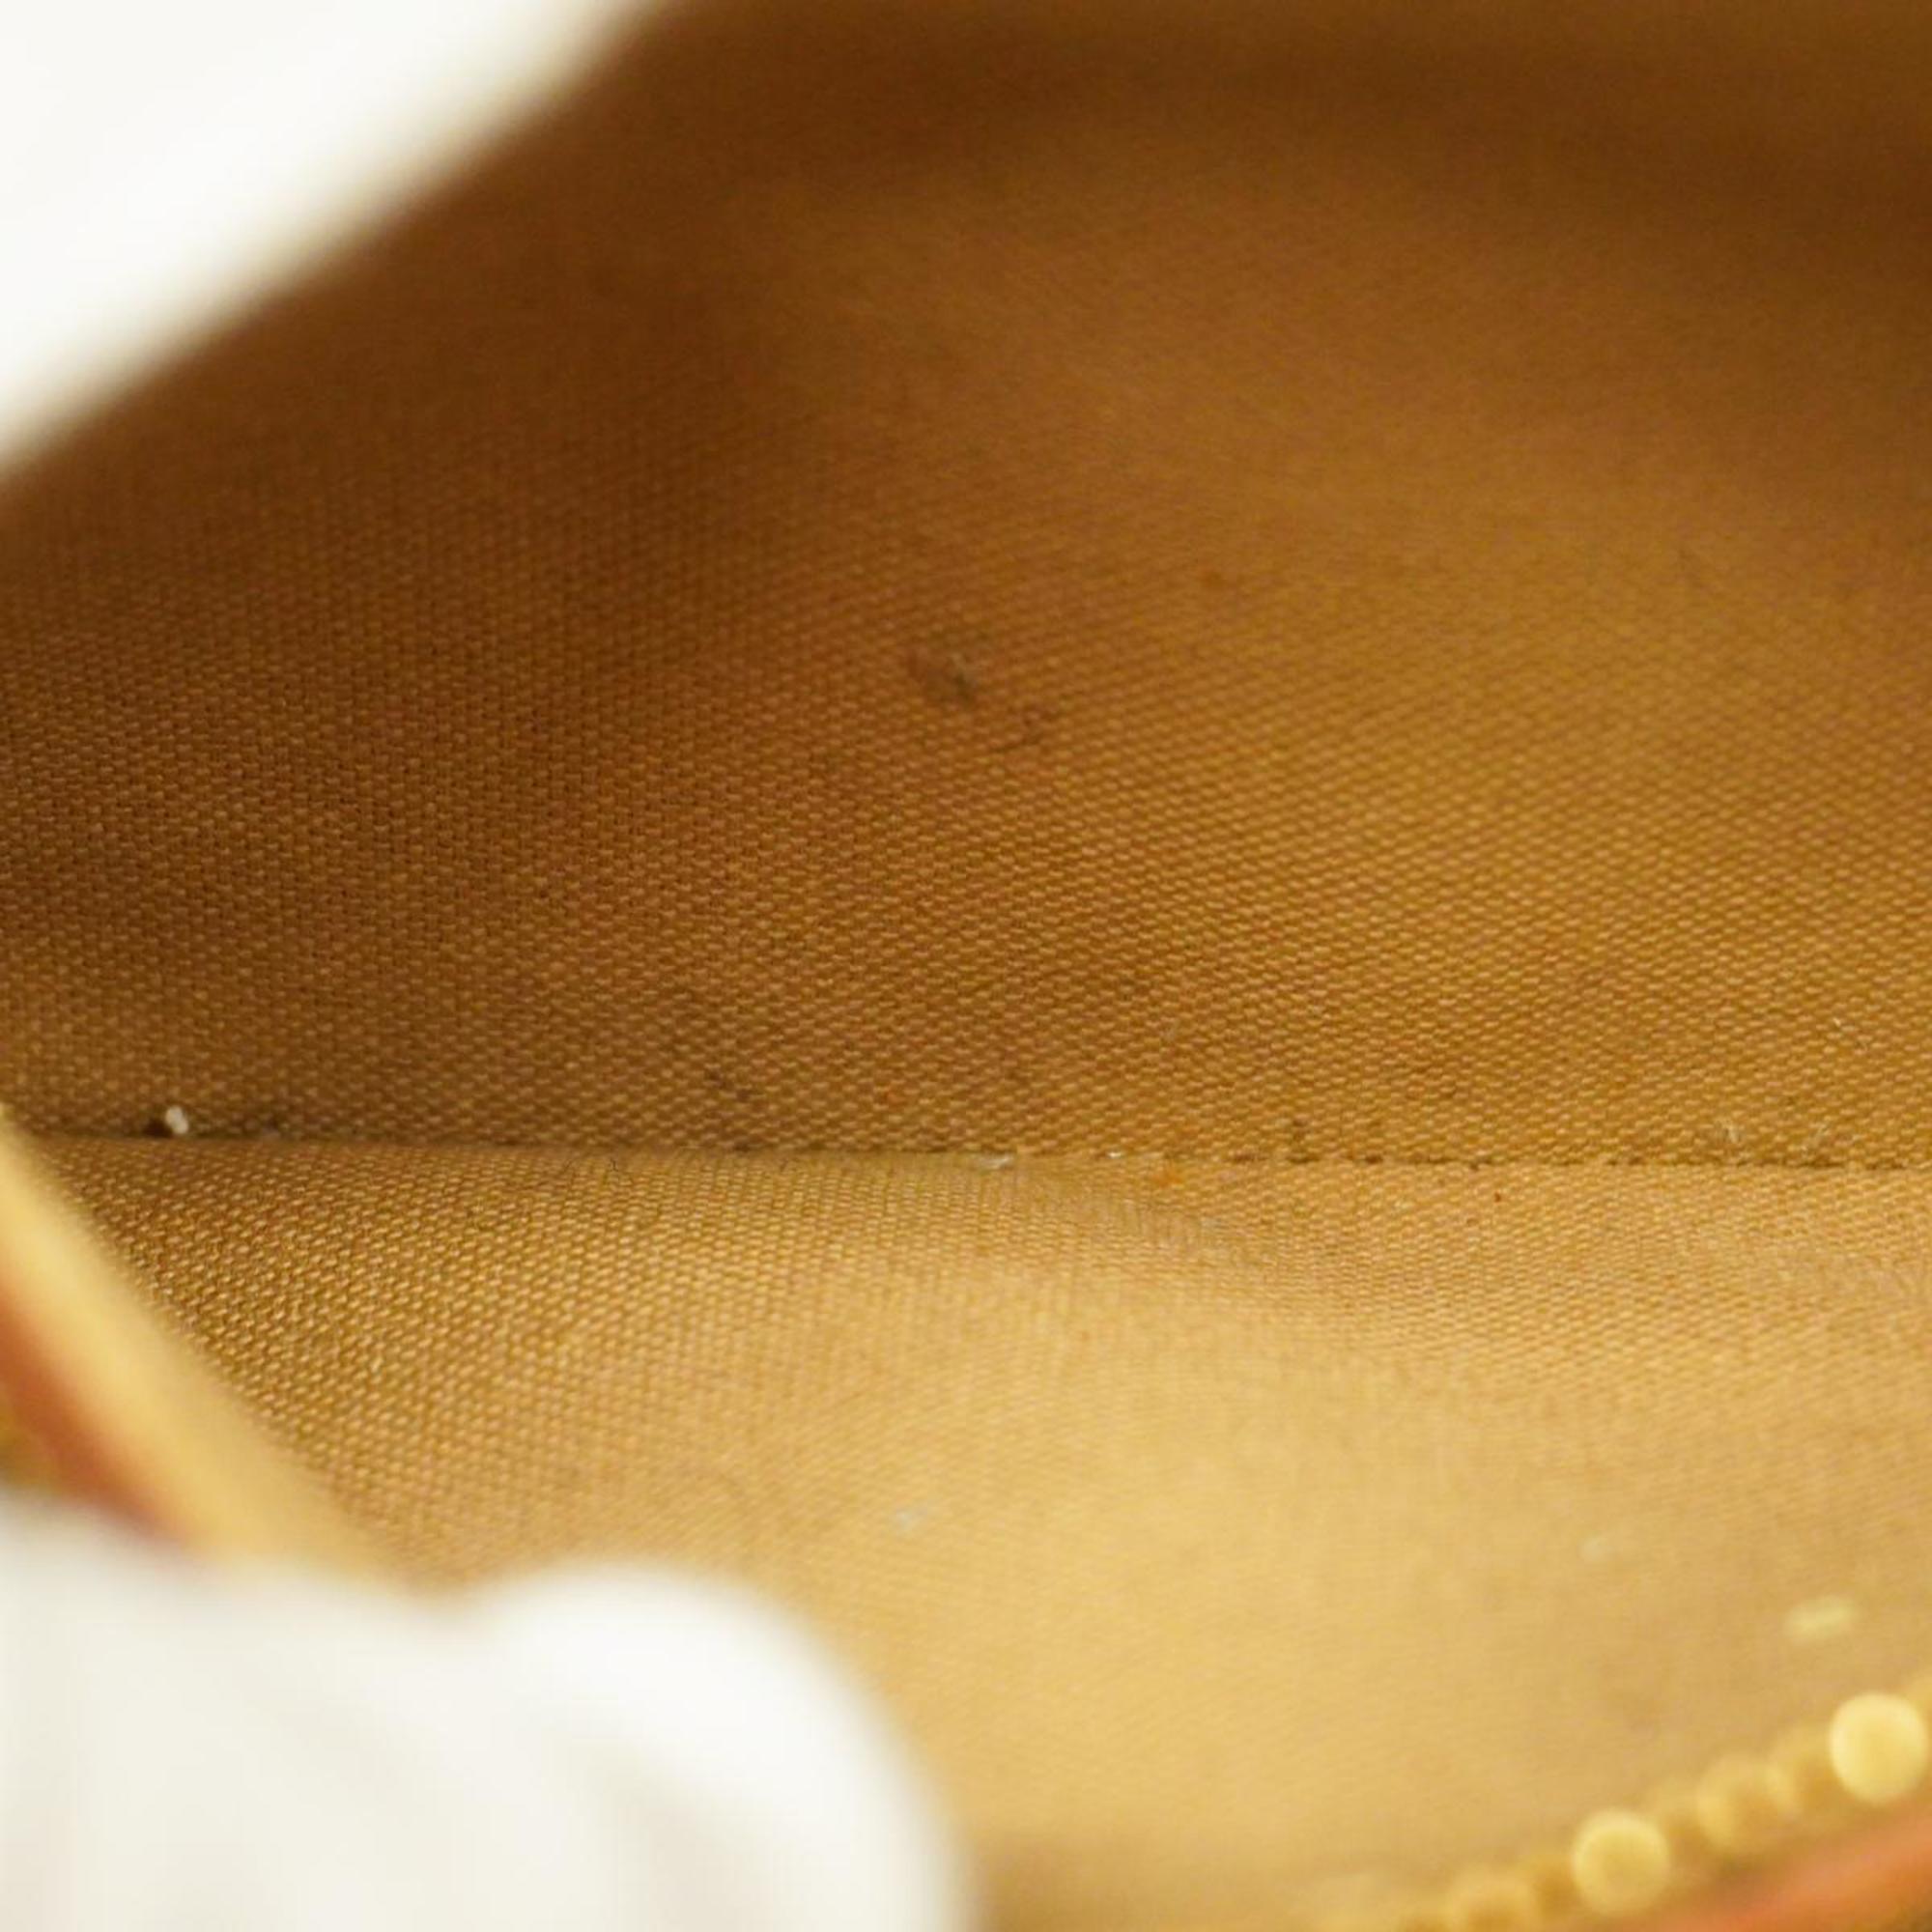 Louis Vuitton Tote Bag Monogram Neverfull PM M46979 Brown Women's